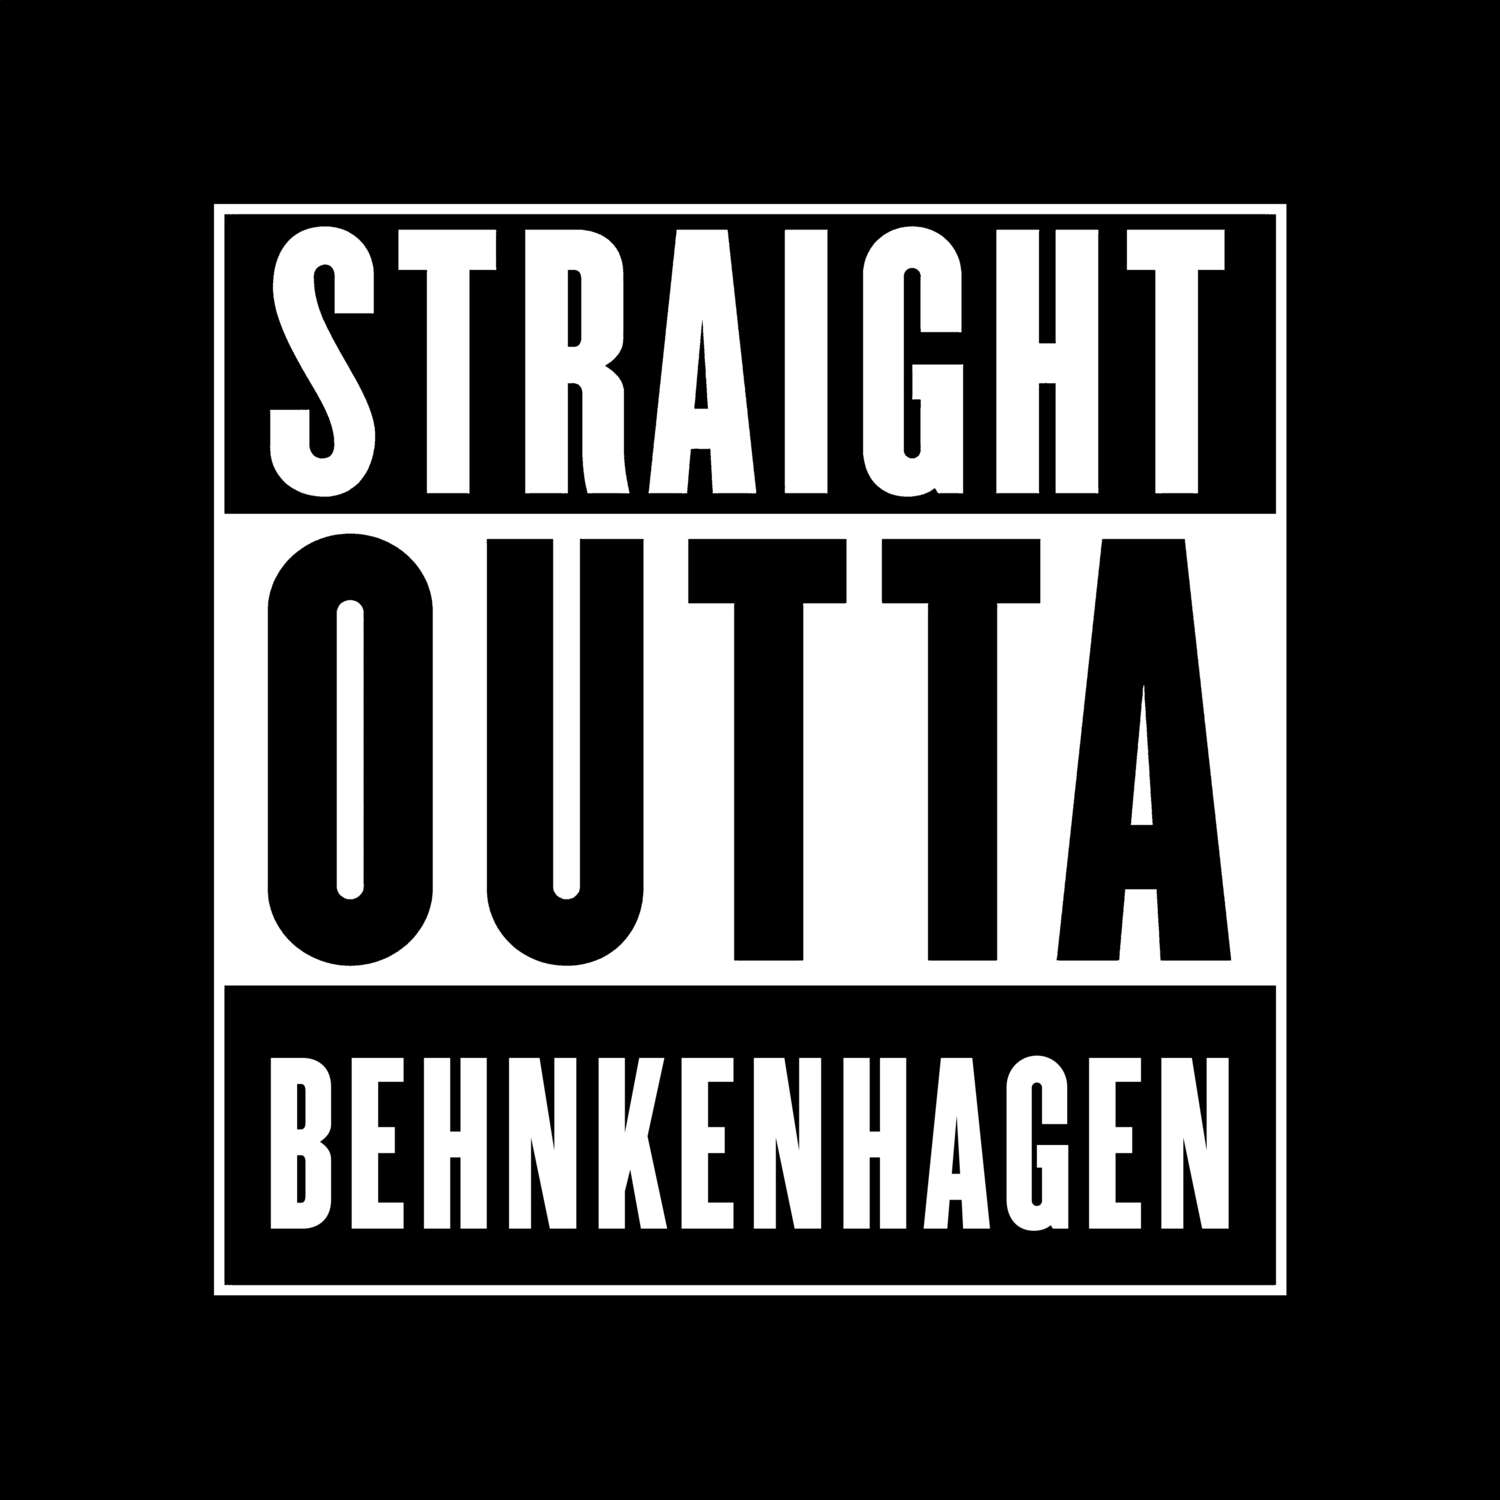 Behnkenhagen T-Shirt »Straight Outta«